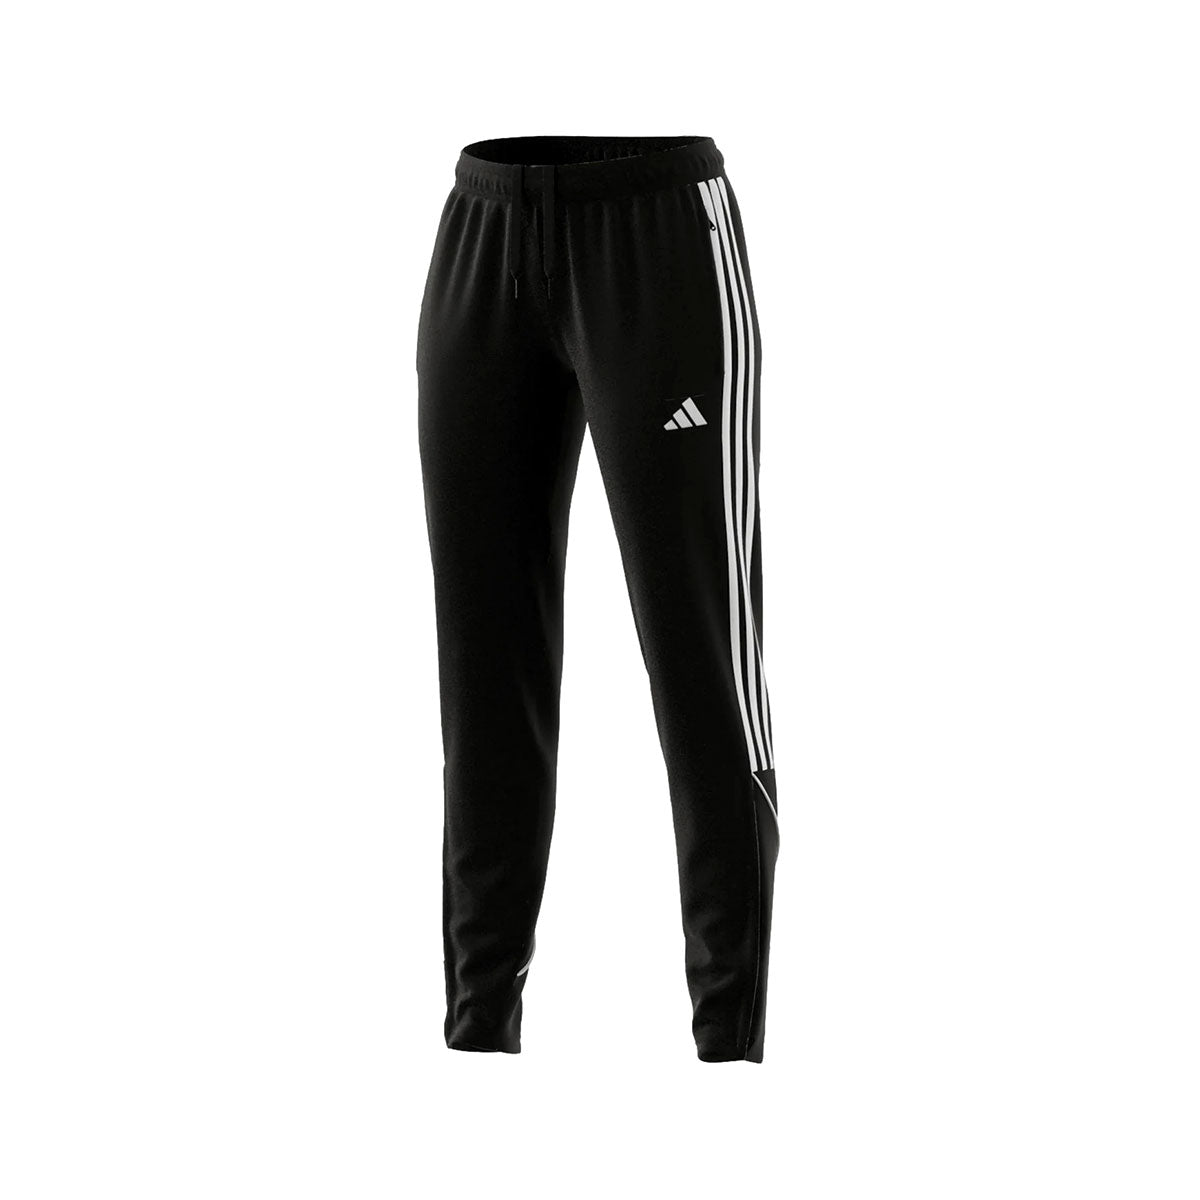 Adidas Women's Tiro 23 League Pants Black